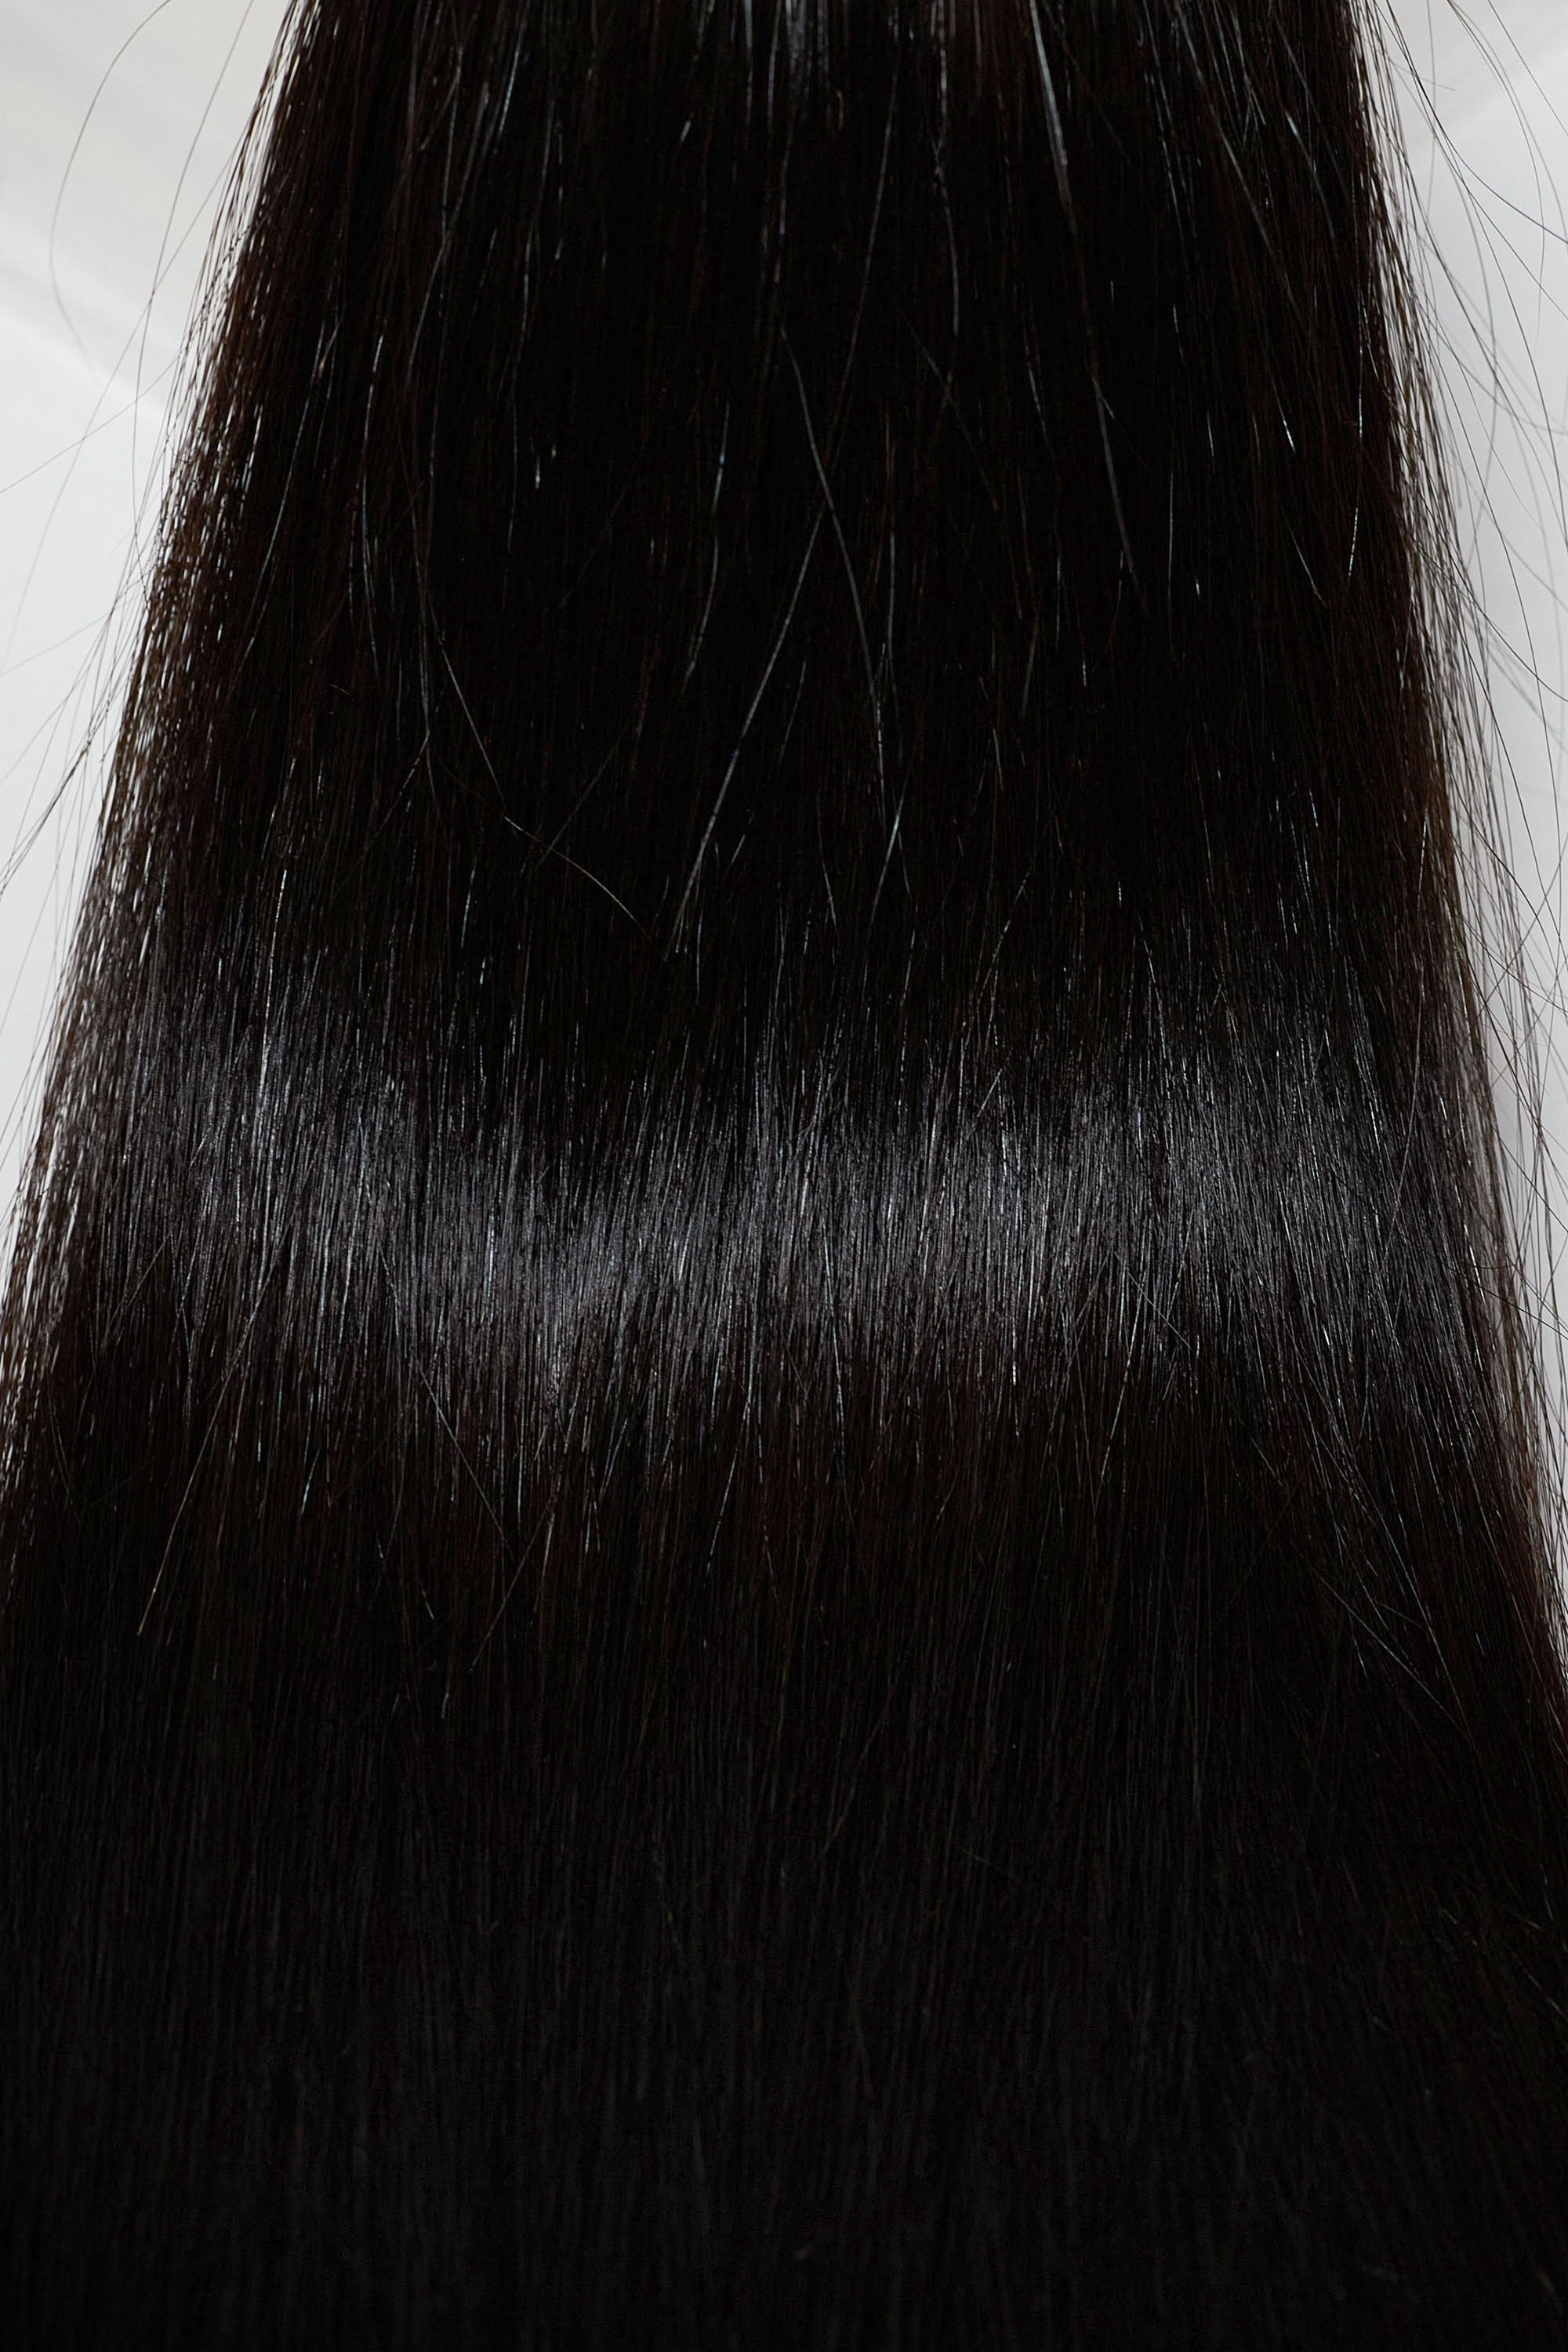 Behair professional Bulk hair "Premium" 16" (40cm) Natural Straight Jet Black #1 - 25g hair extensions